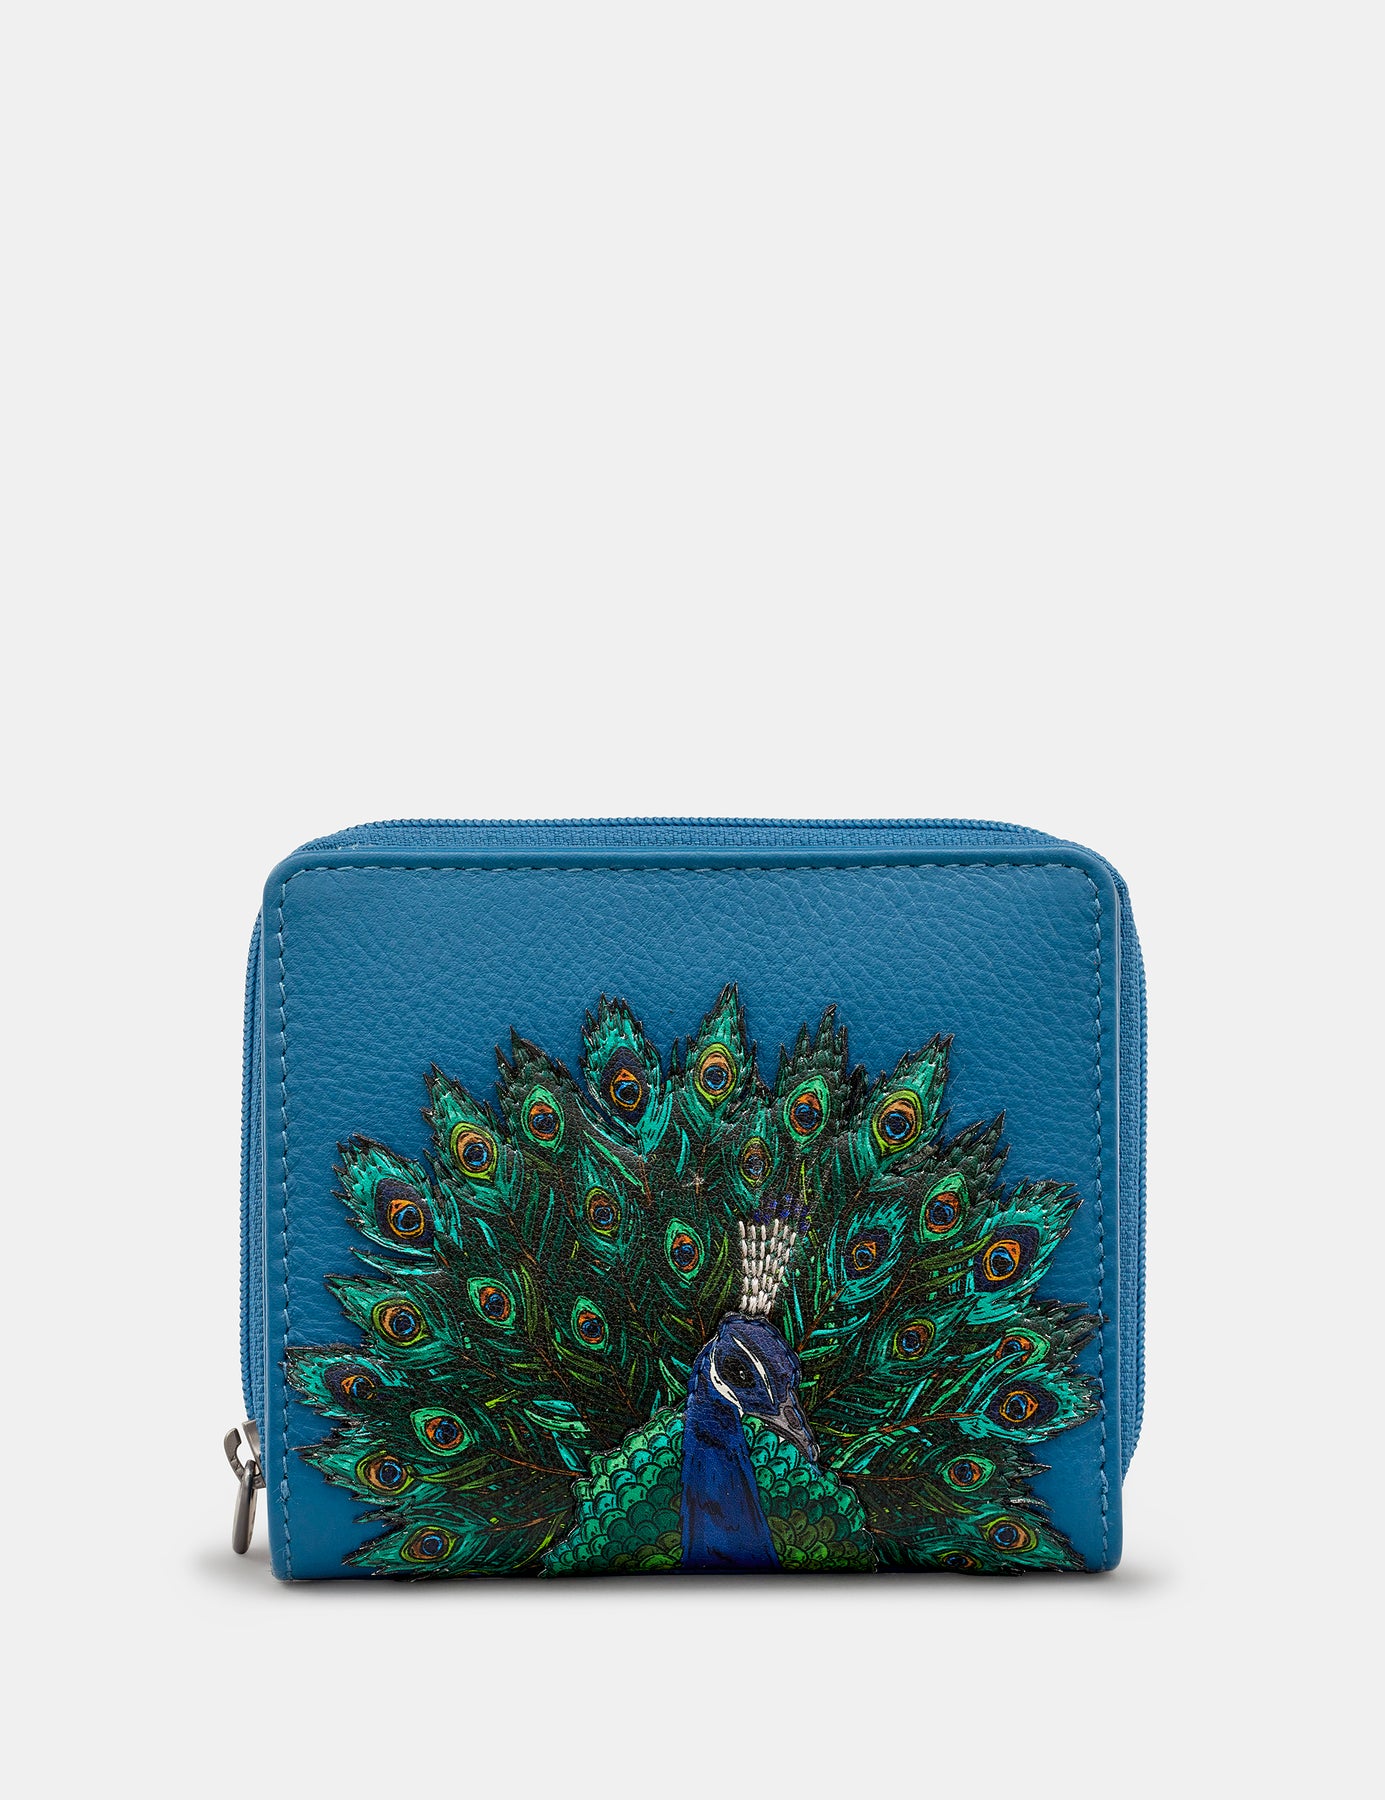 Ekim's Handmade Handbags | Royal Blue and Green Peacock Hand… | Flickr